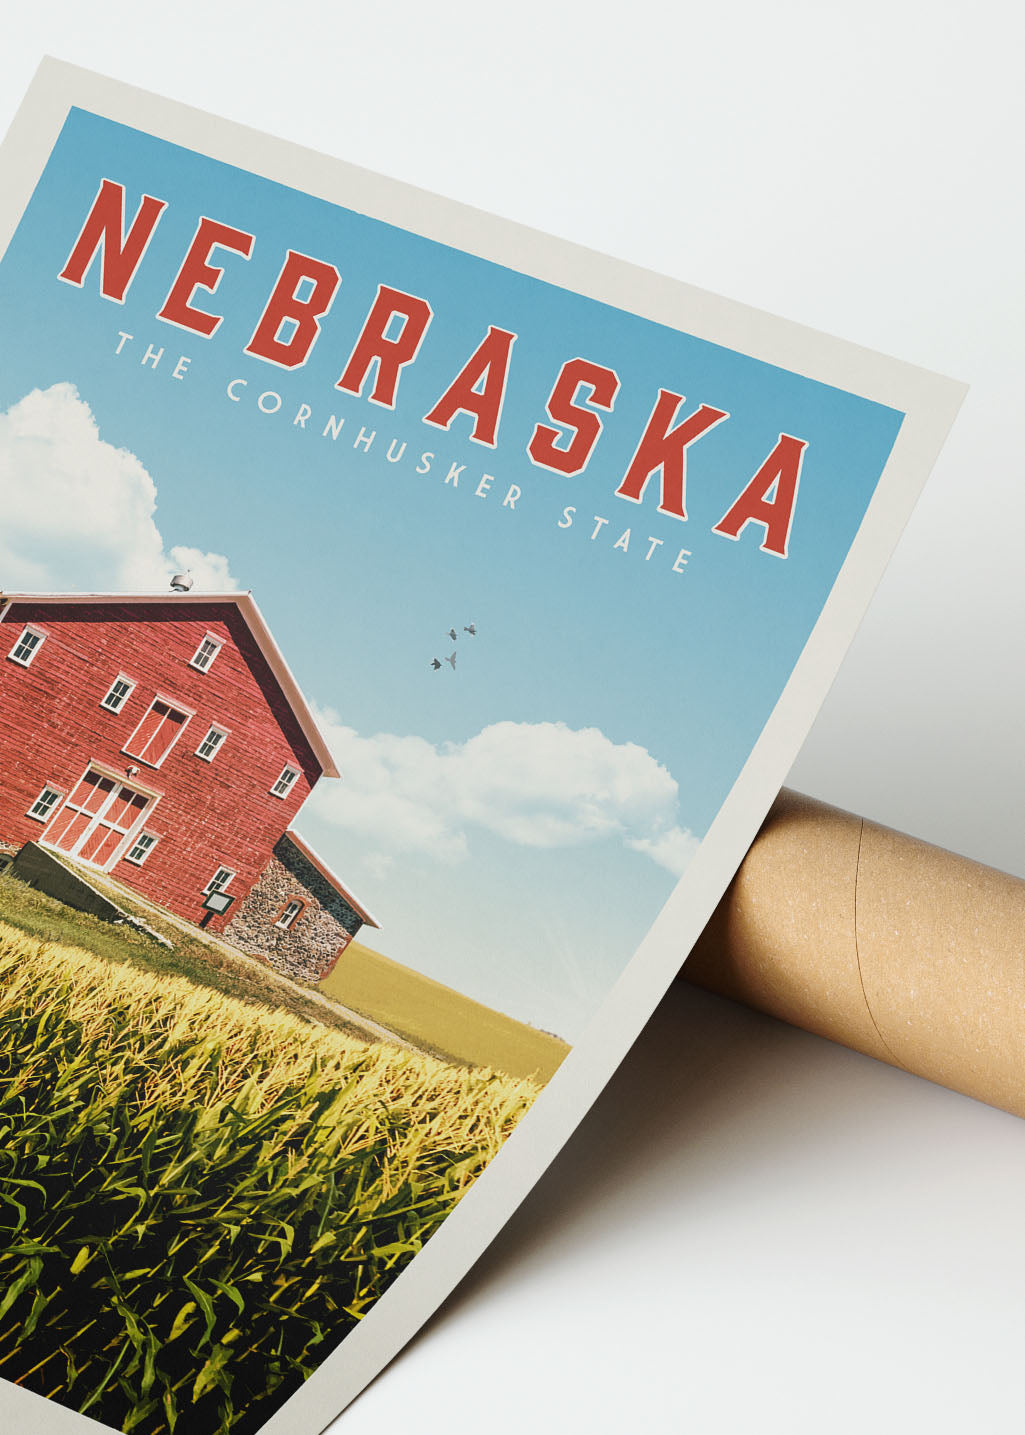 Nebraska - Vintage Travel Print - Vintaprints